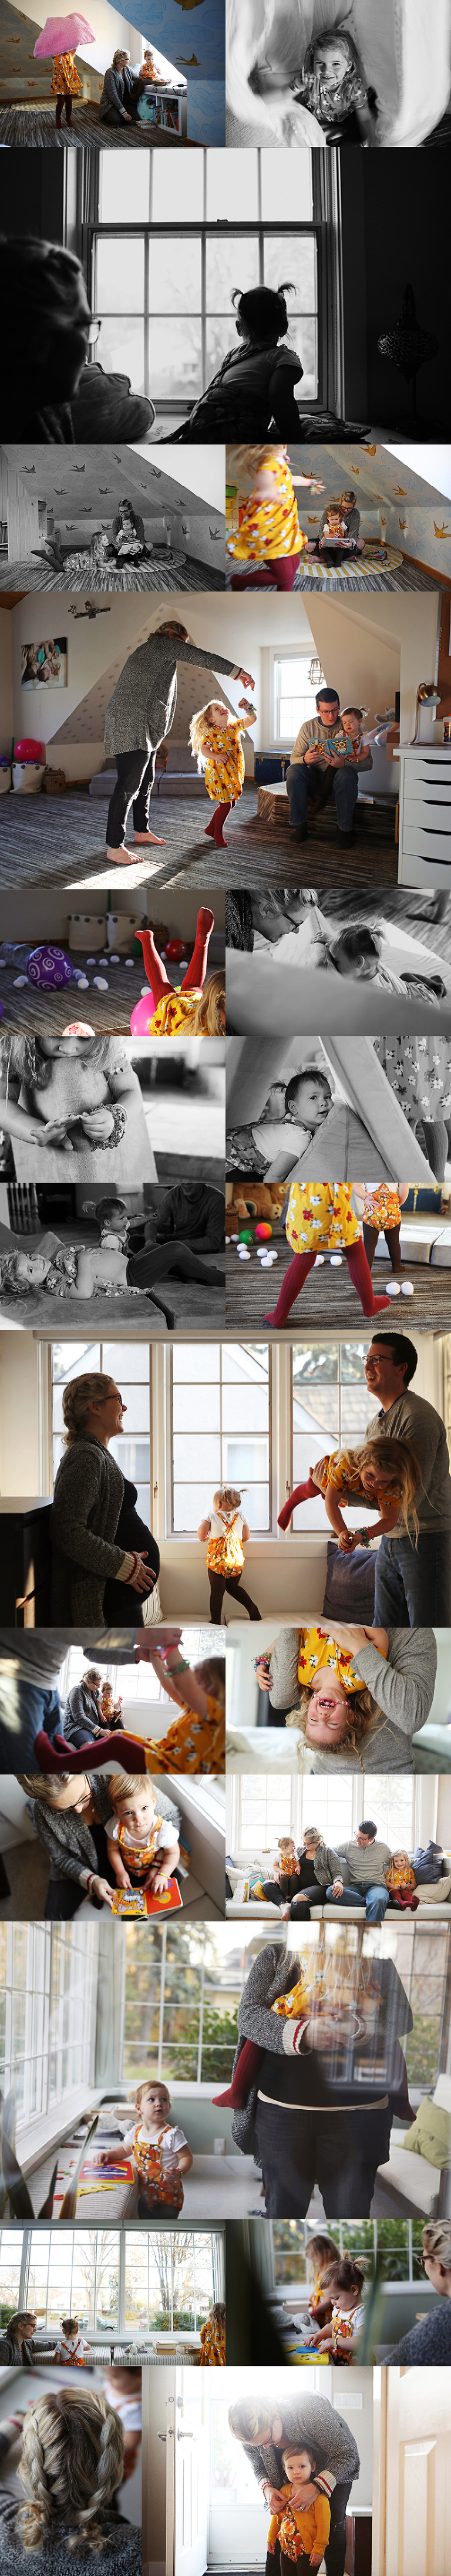 About - edmonton storytelling family photographer